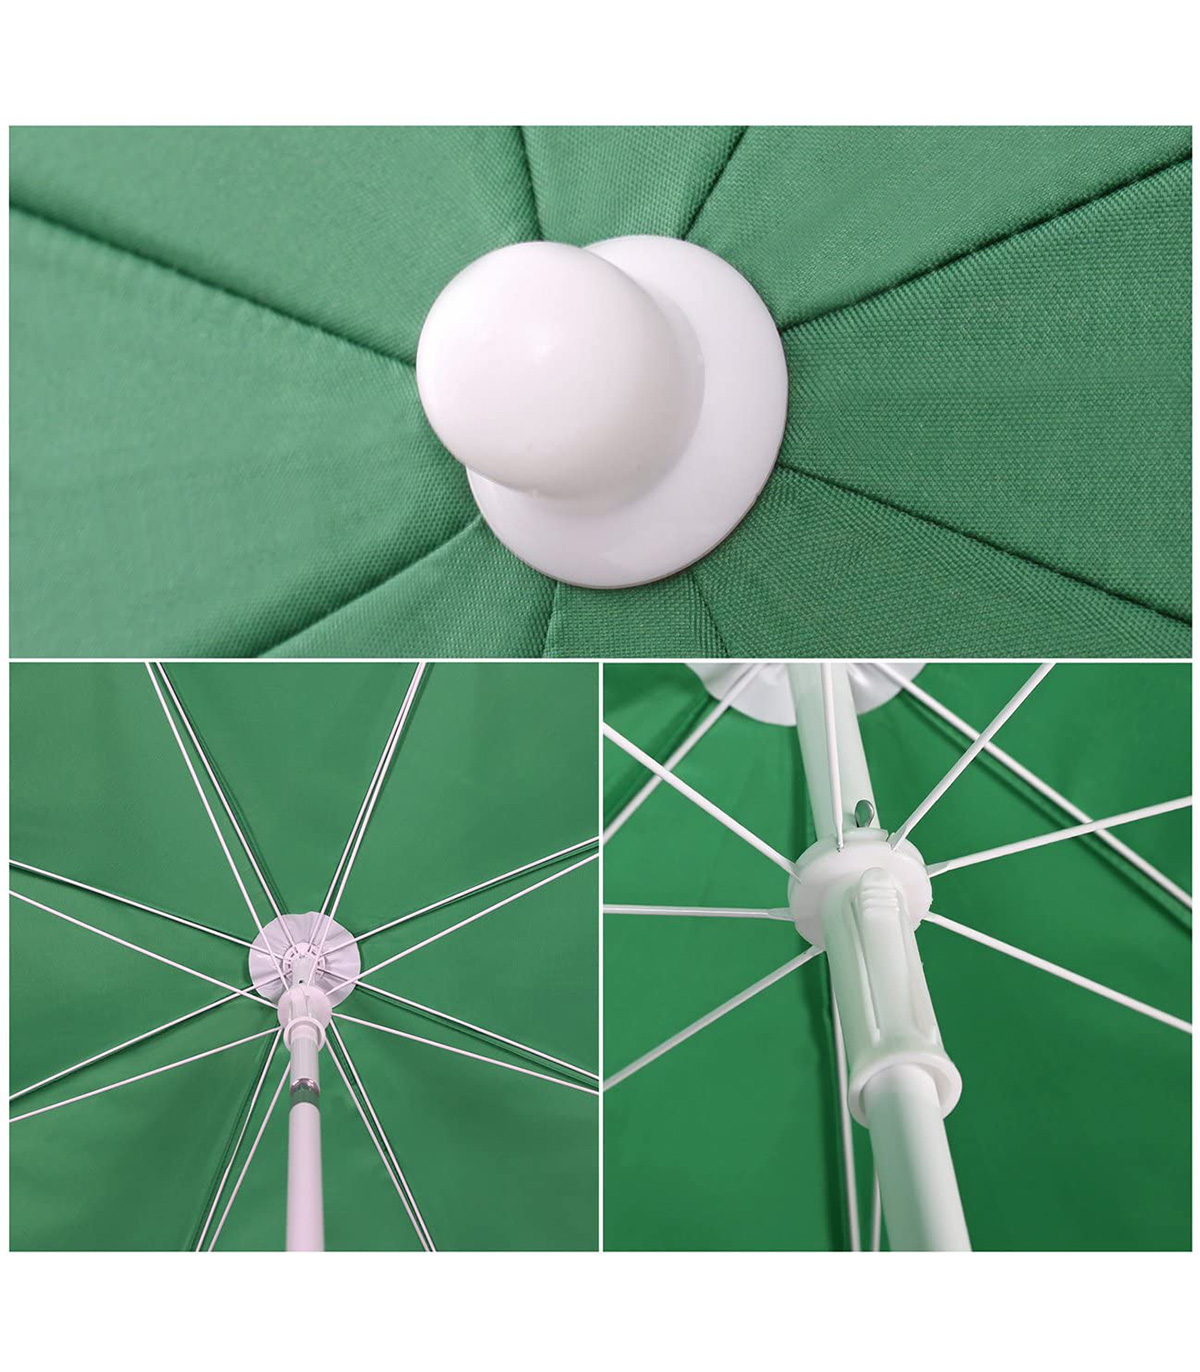 Umbrela soare rotunda, uv20+, verde, 160 cm,